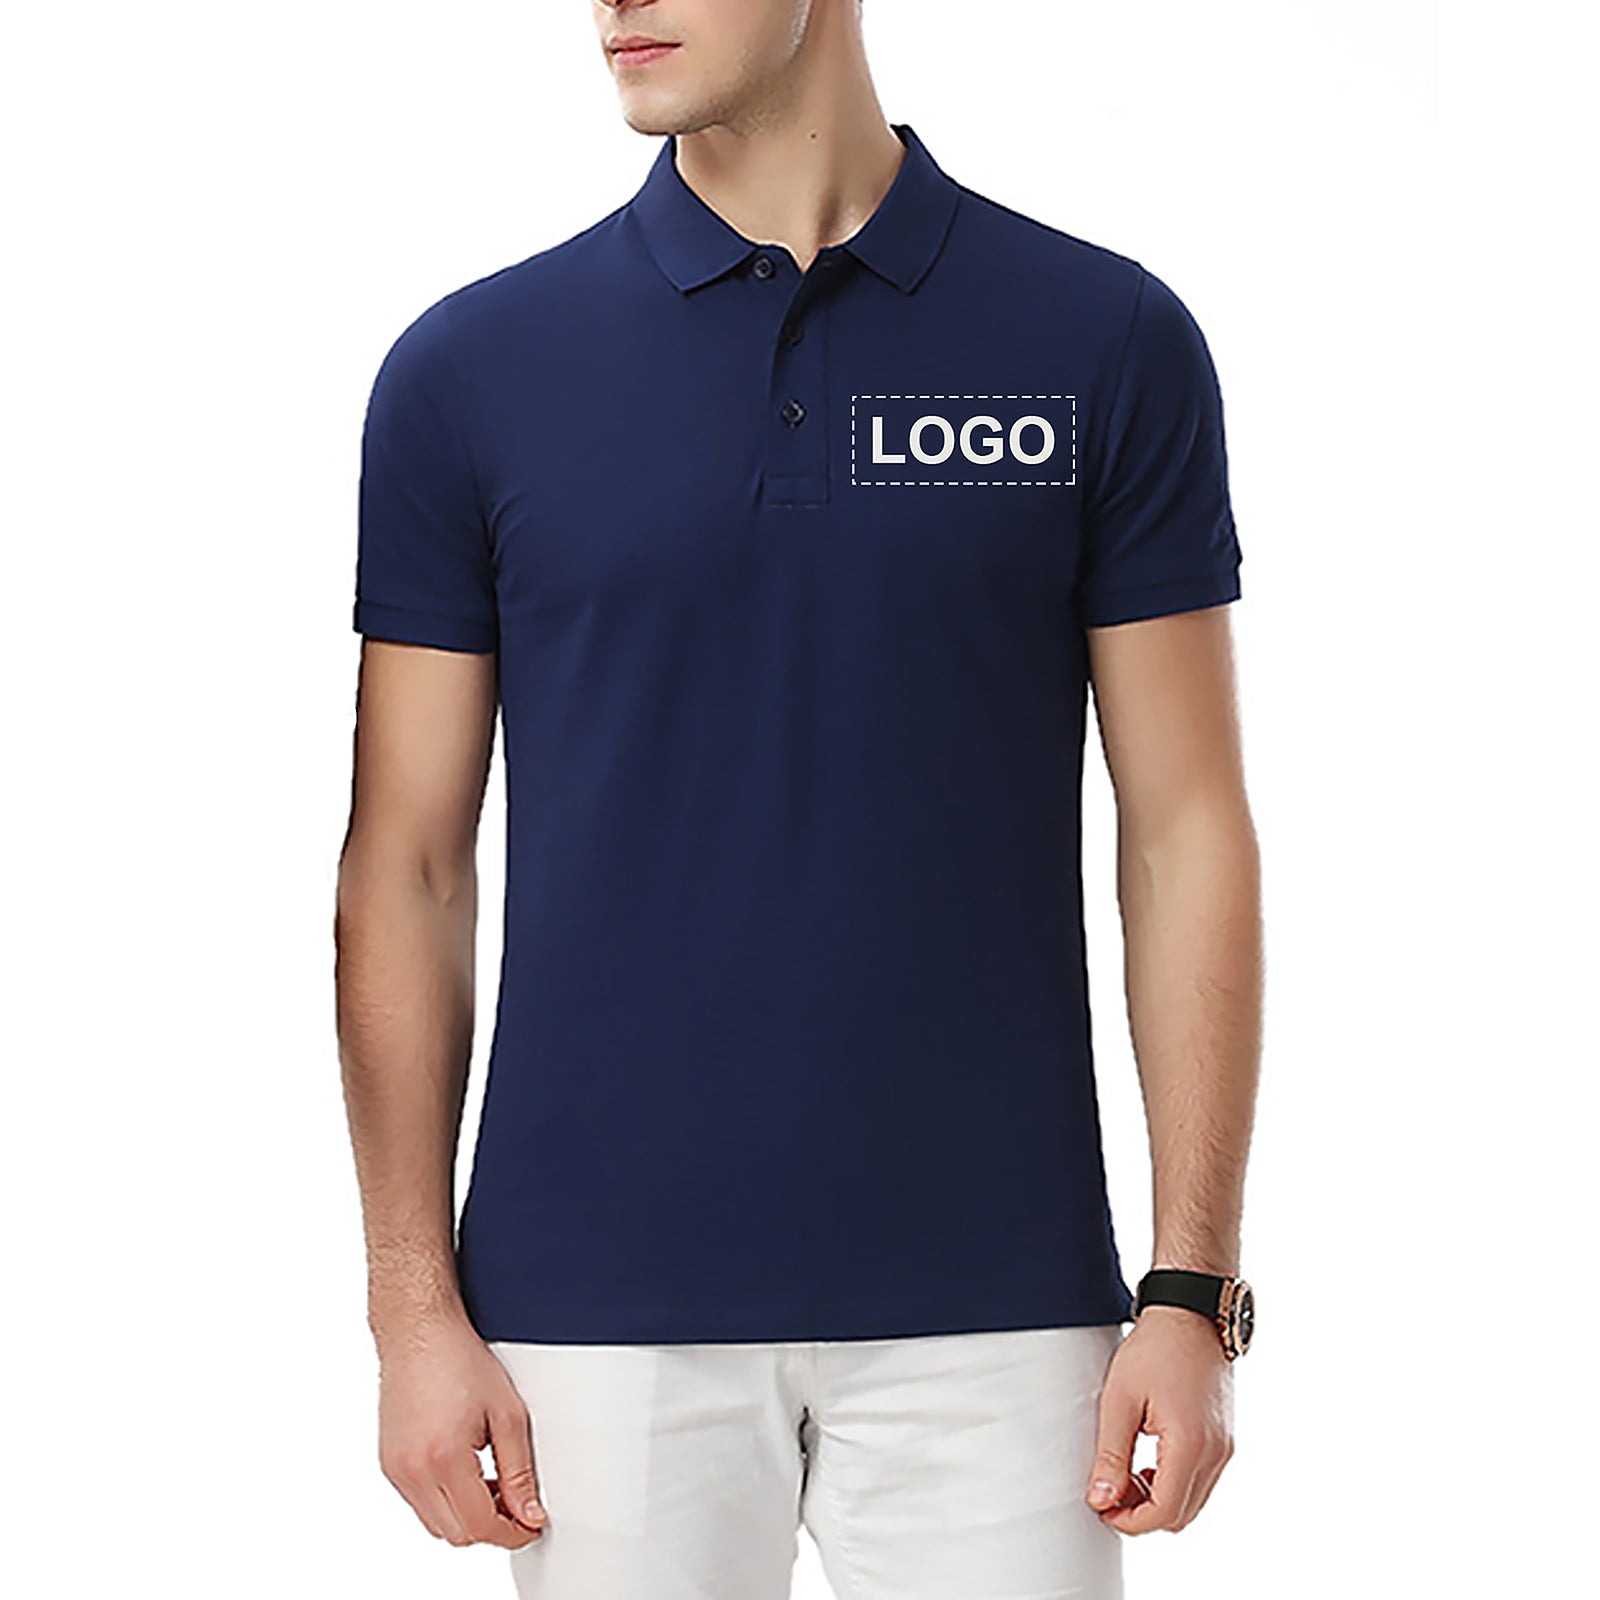 Custom polo shirts customize polo shirts with logo for man woman company team